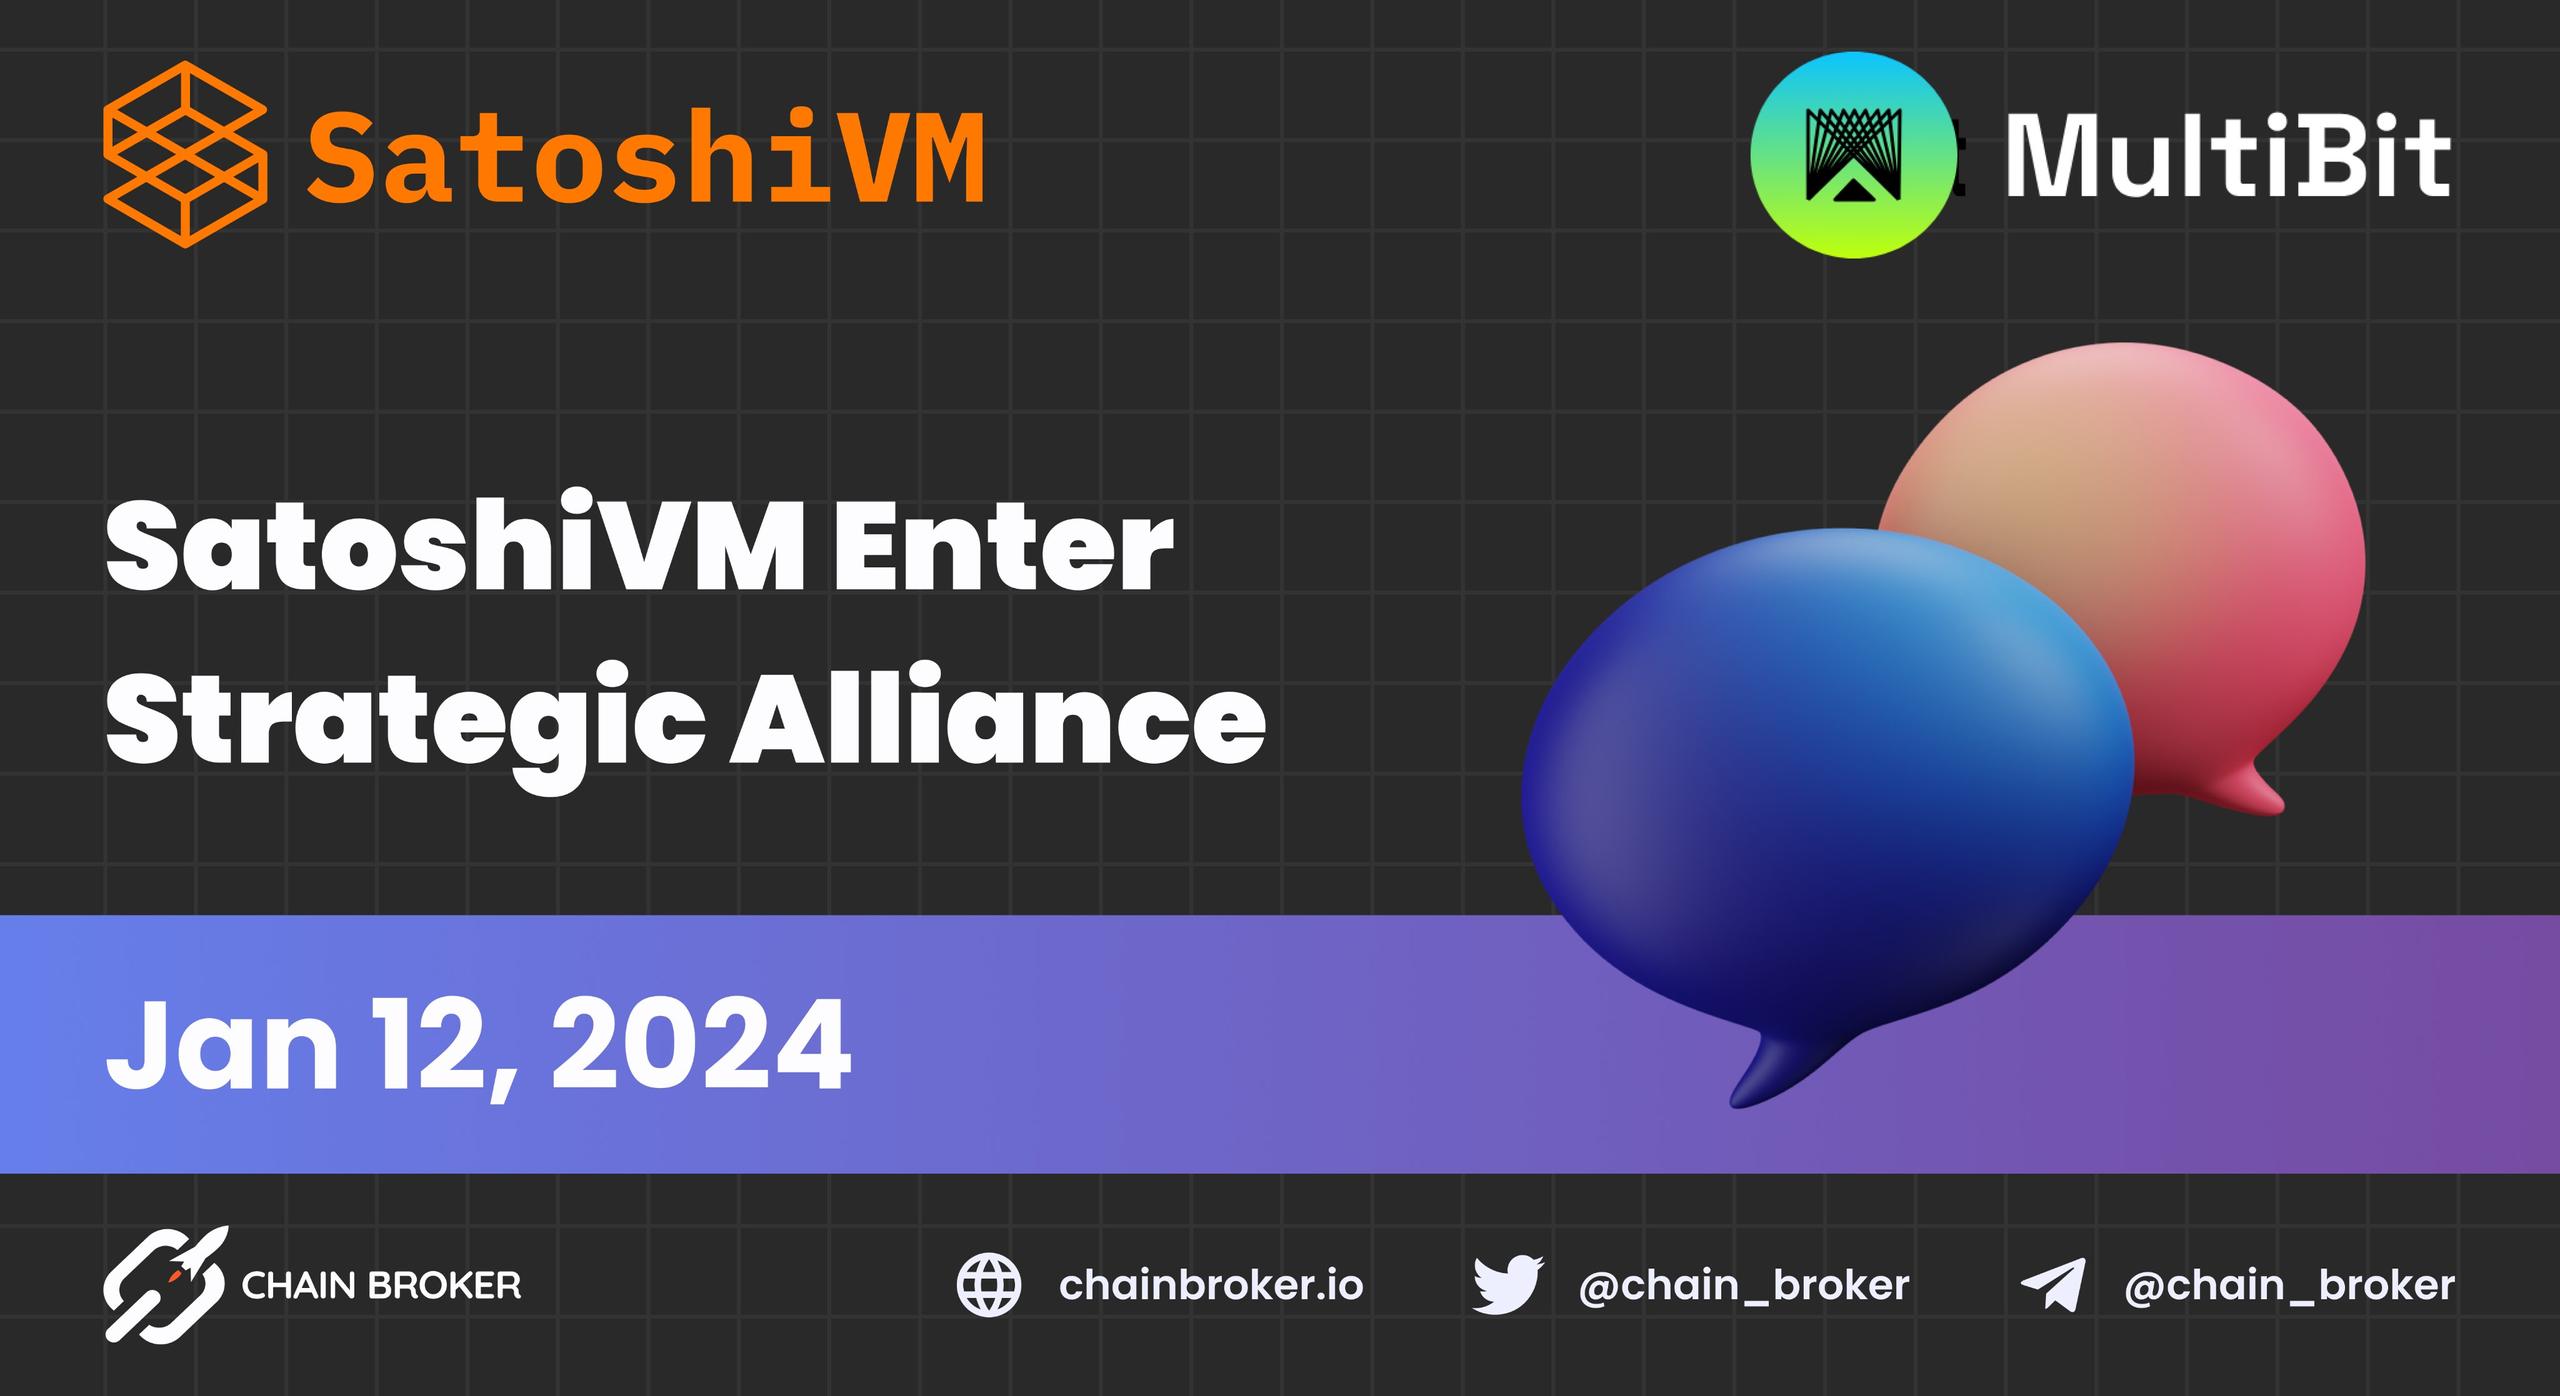 SatoshiVM Enters a Strategic Alliance with MultiBit